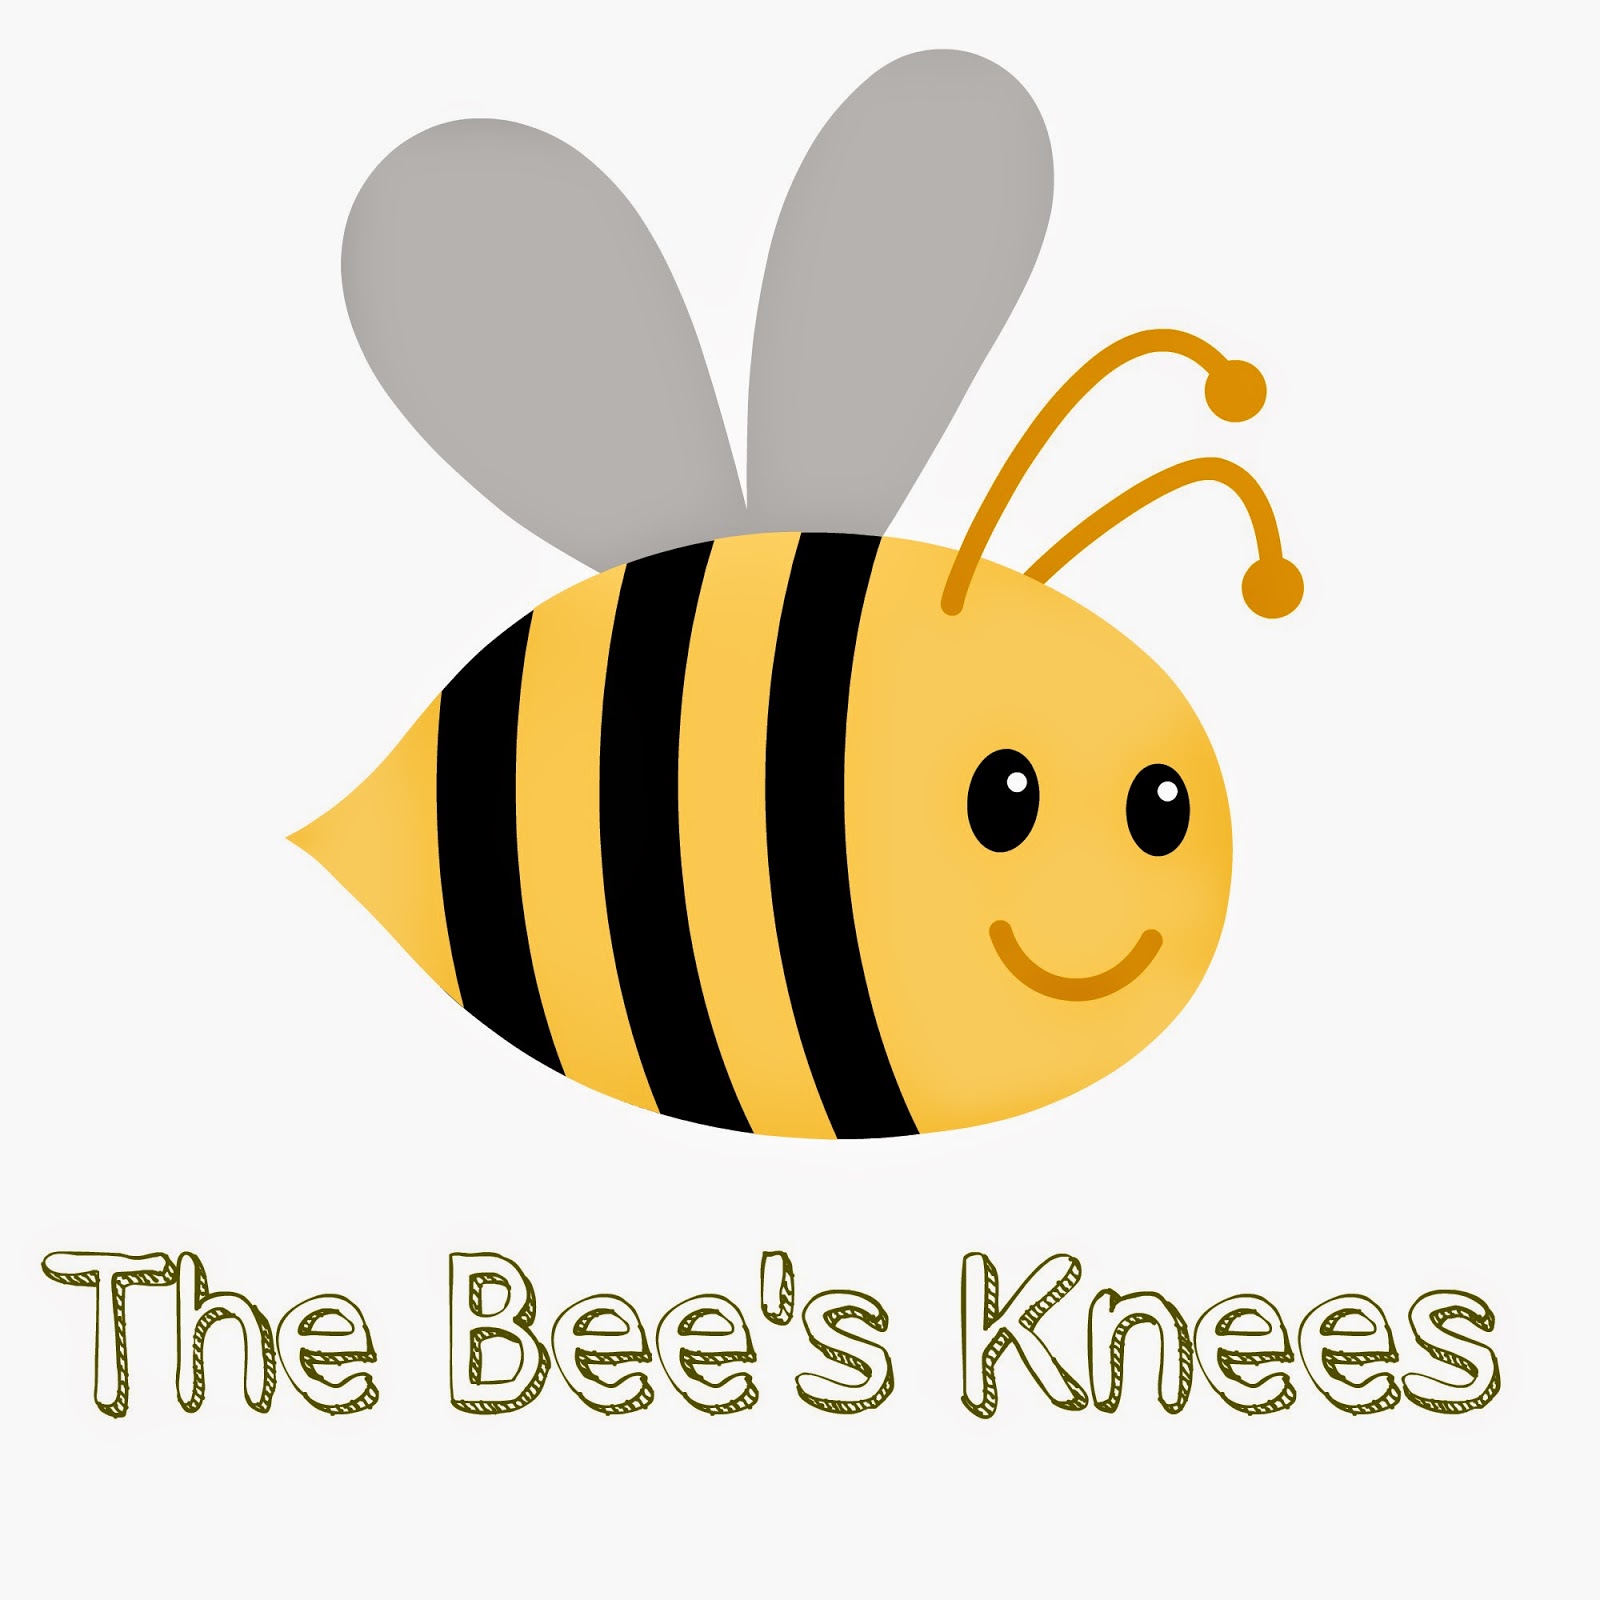 bee's knees clipart - photo #14